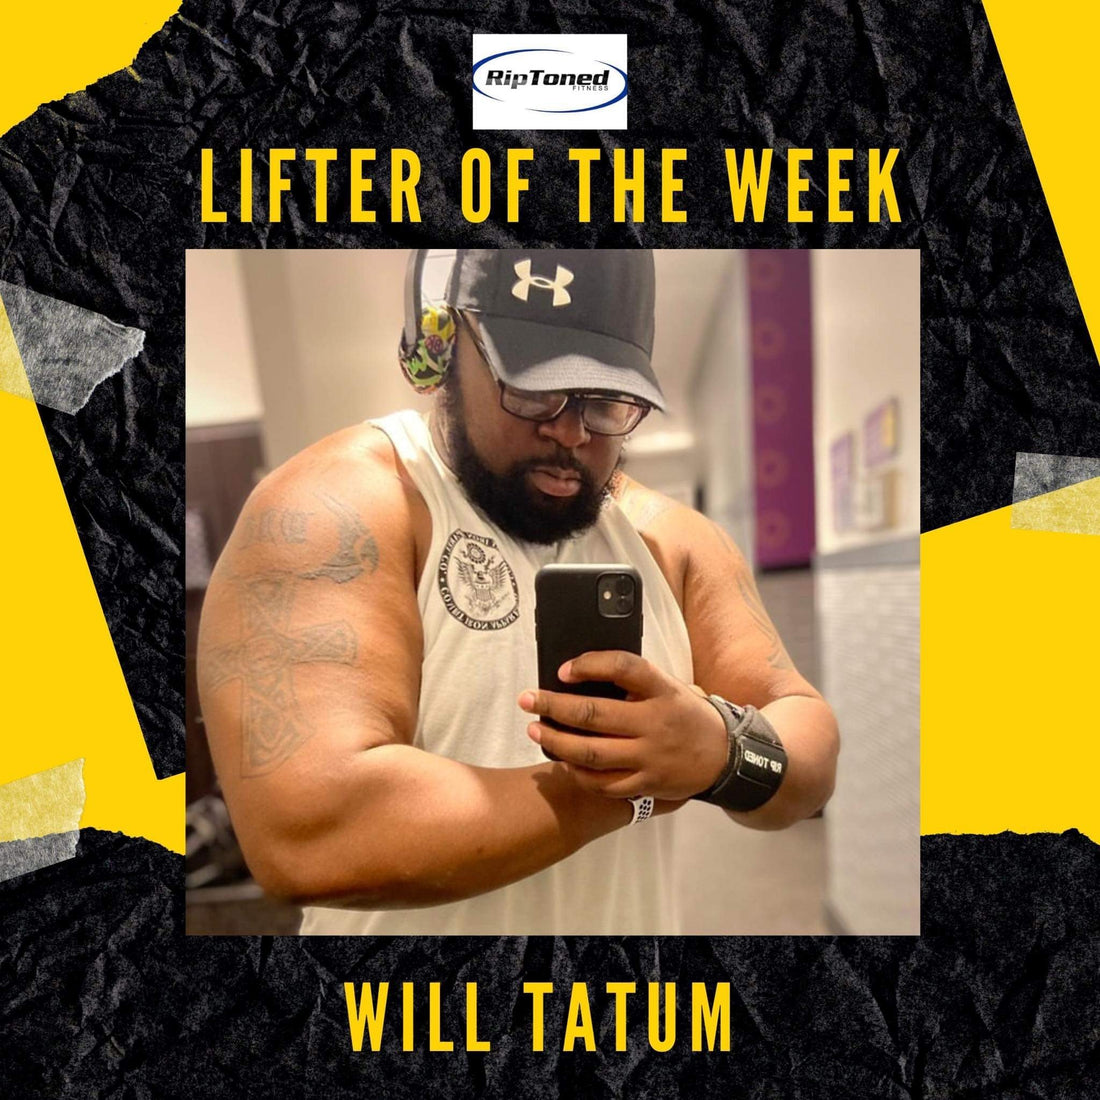 Lifter of the Week - Will Tatum - Rip Toned